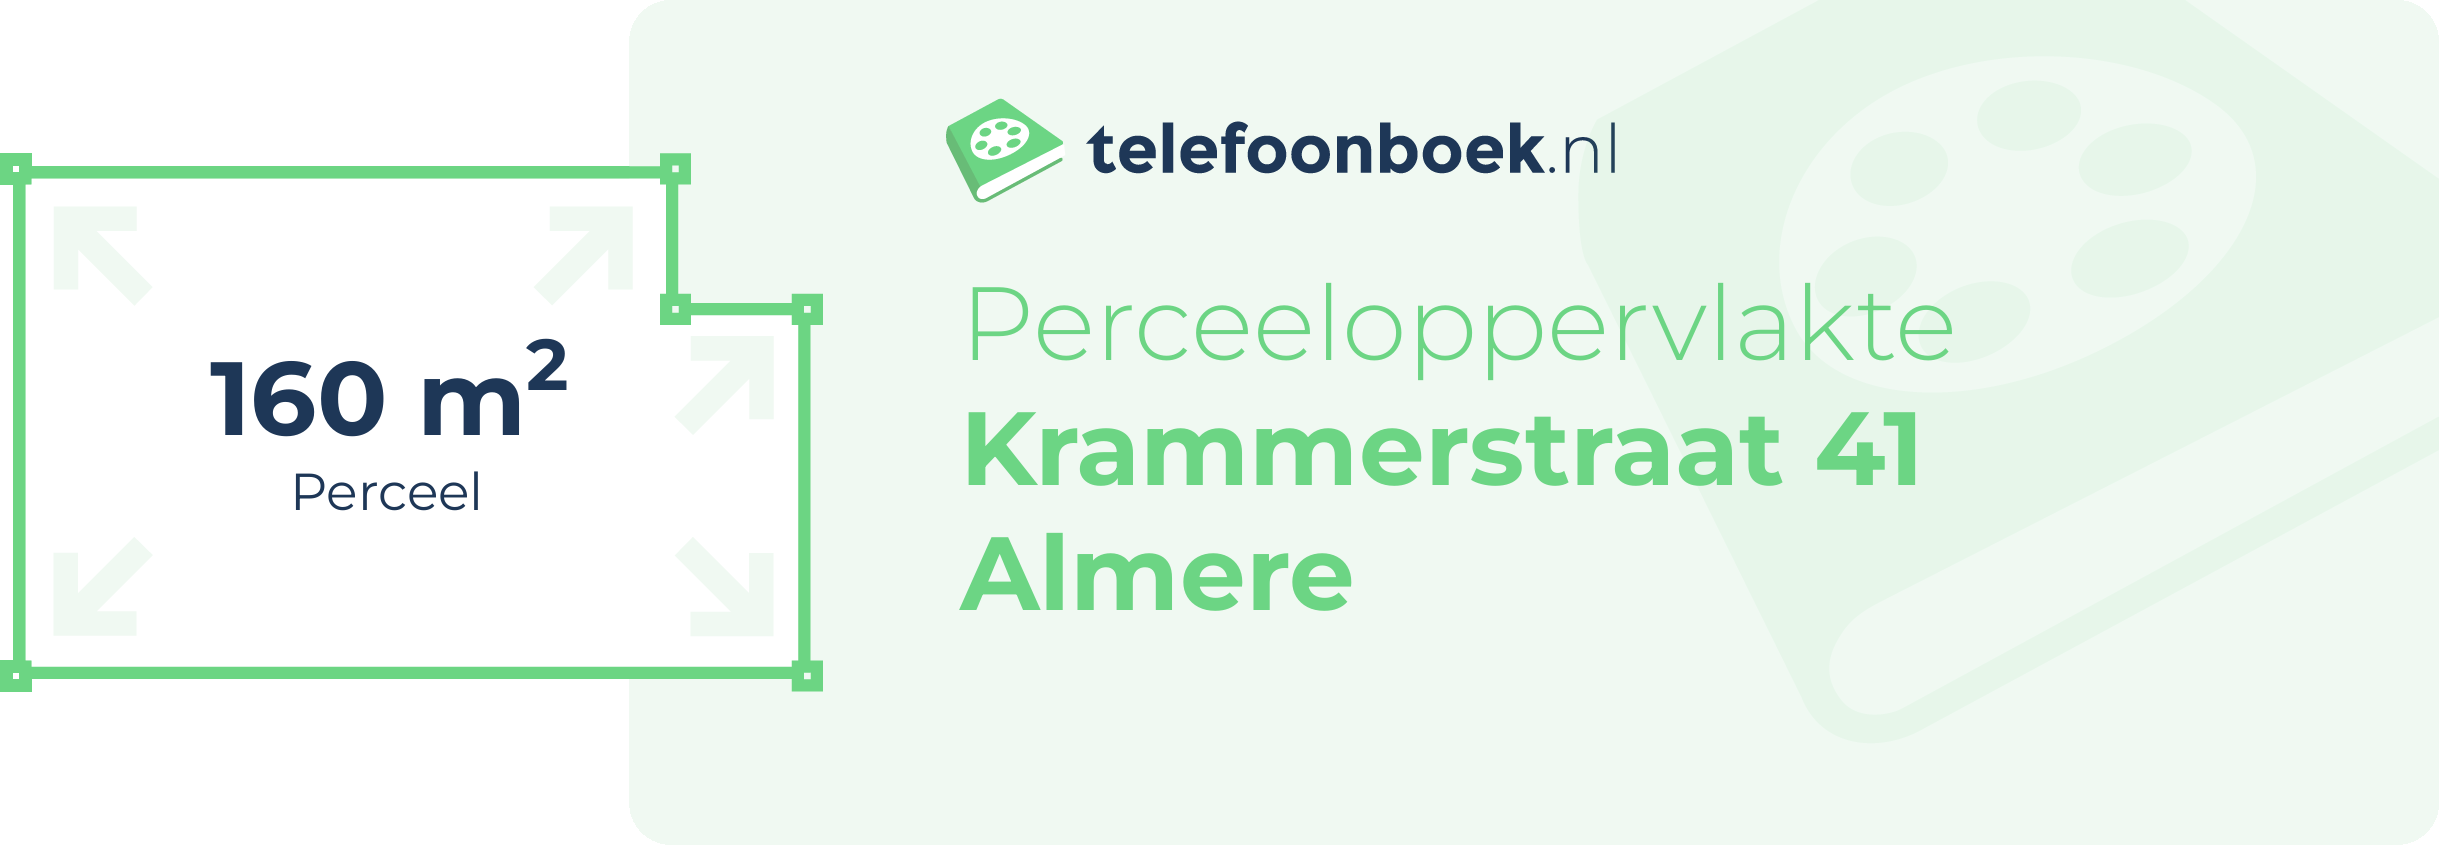 Perceeloppervlakte Krammerstraat 41 Almere